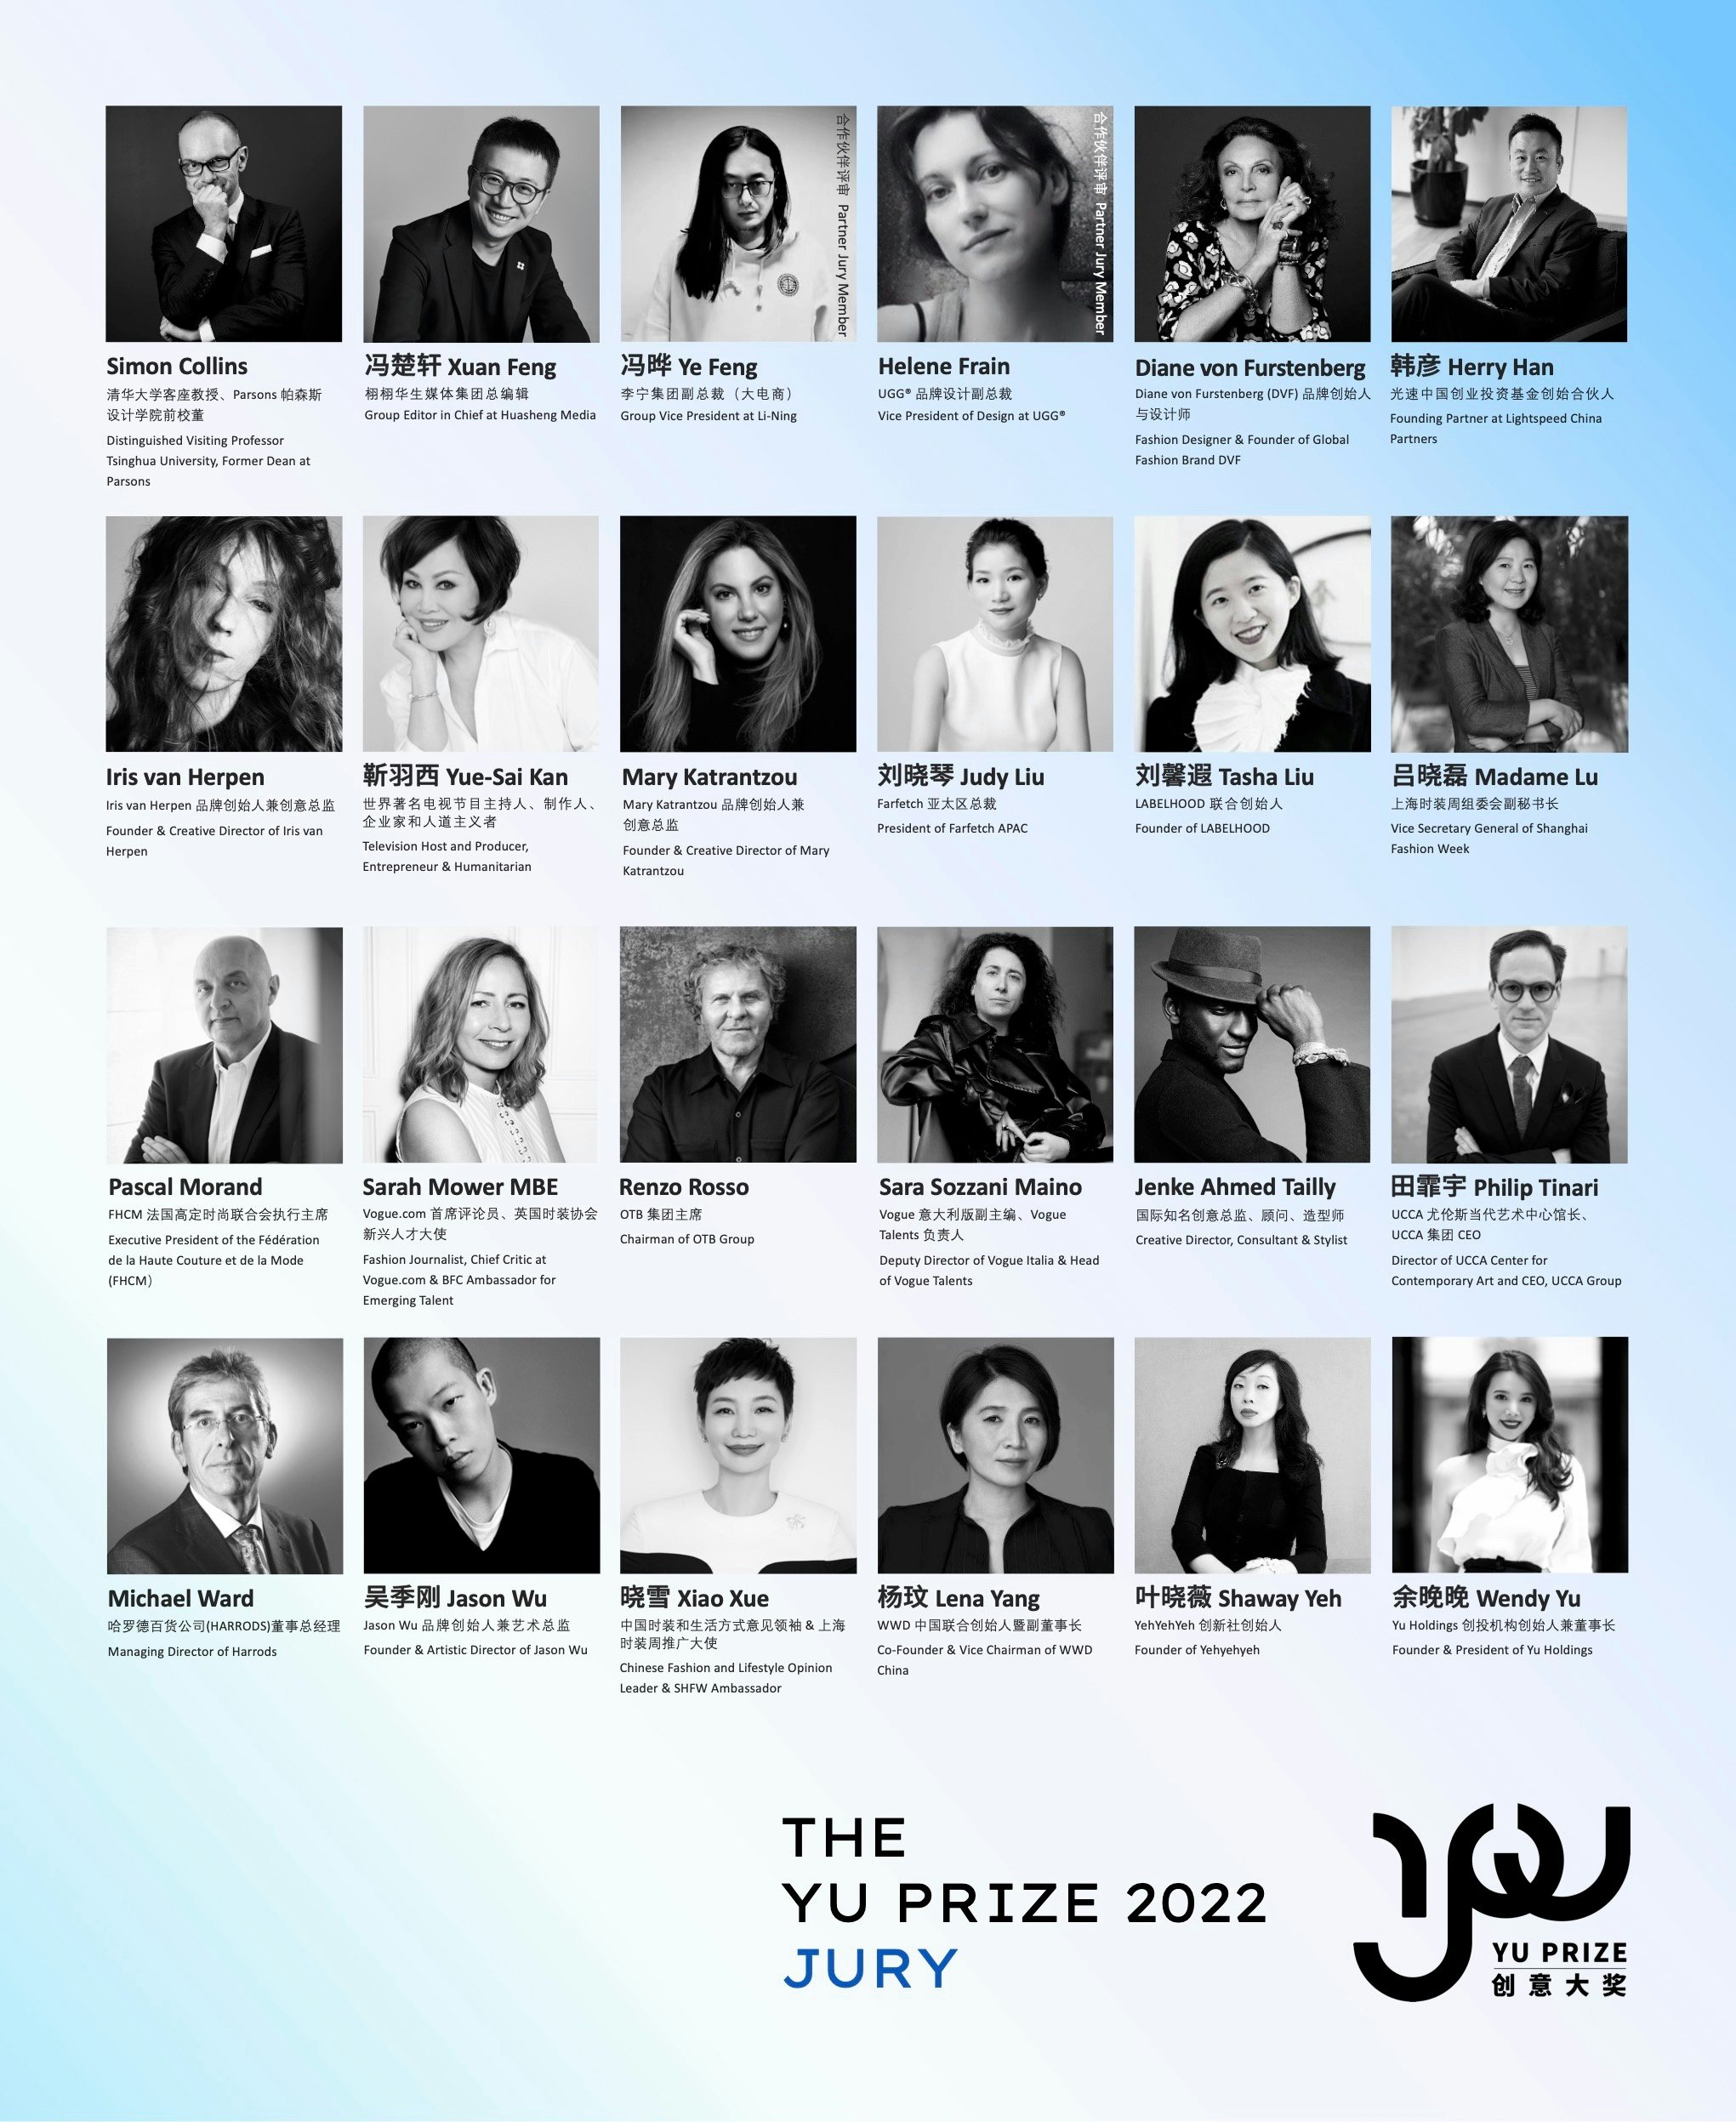 Yu Prize 2022 edition Jury Panel. Photo: Courtesy of Yu Prize